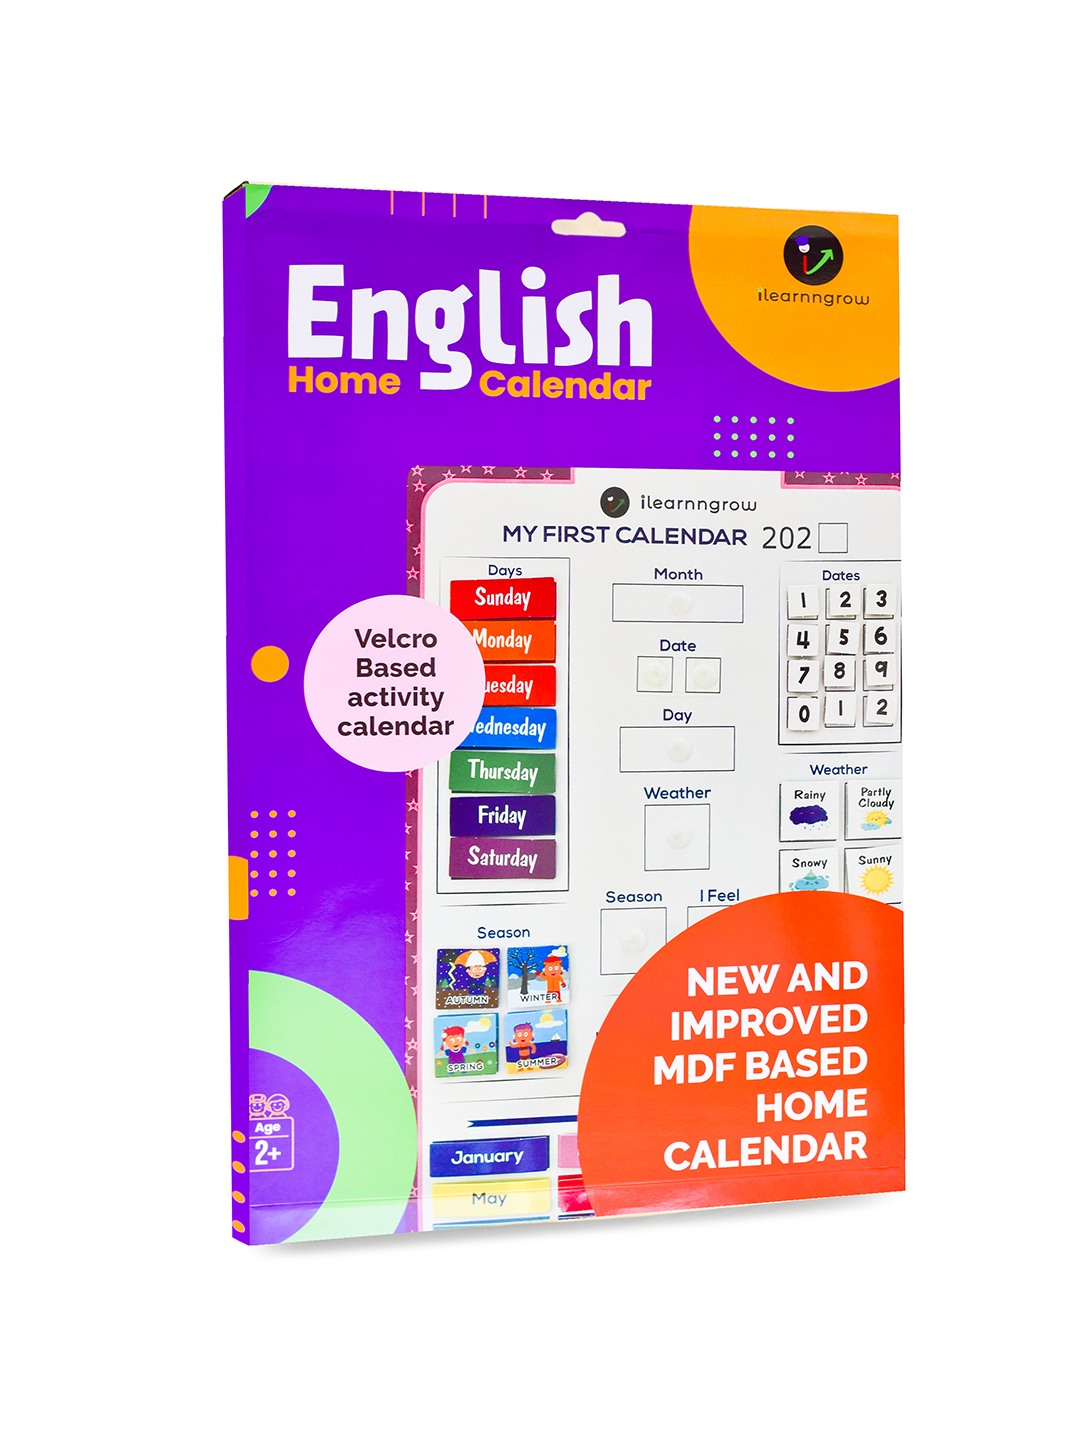 Home Calendar - English